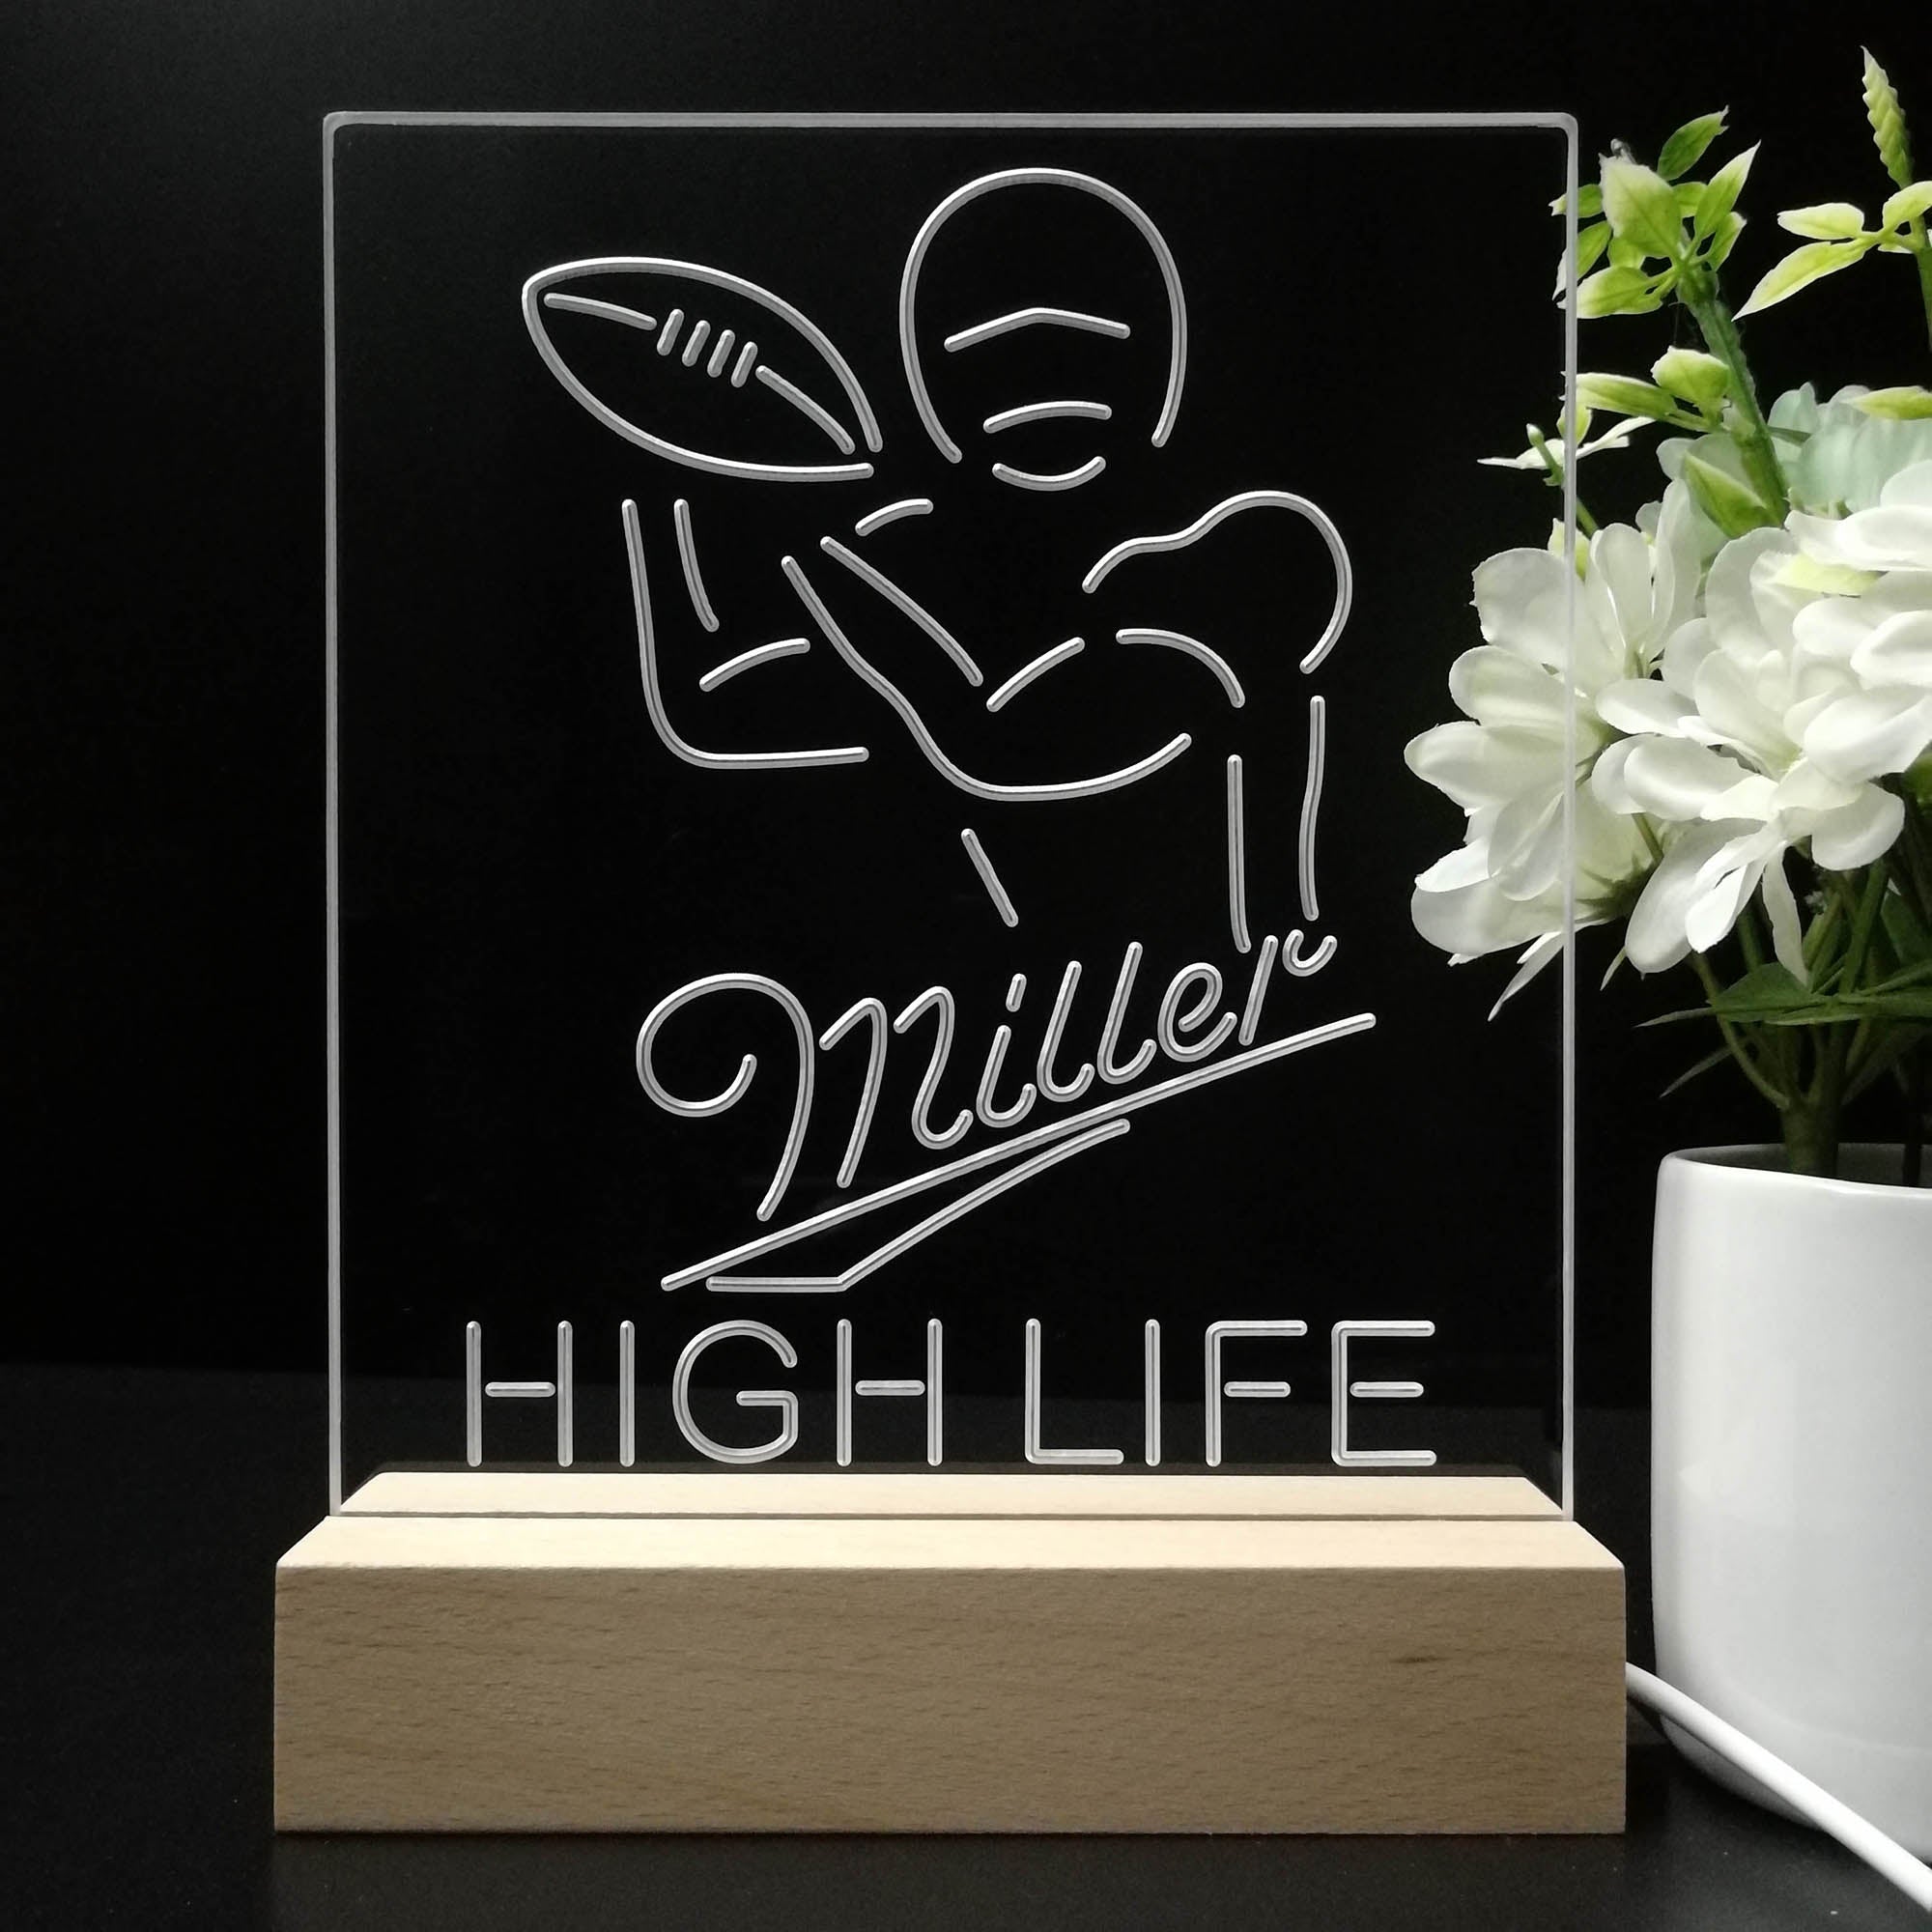 Miller Lite High Life Football Night Light Neon Pub Bar Lamp